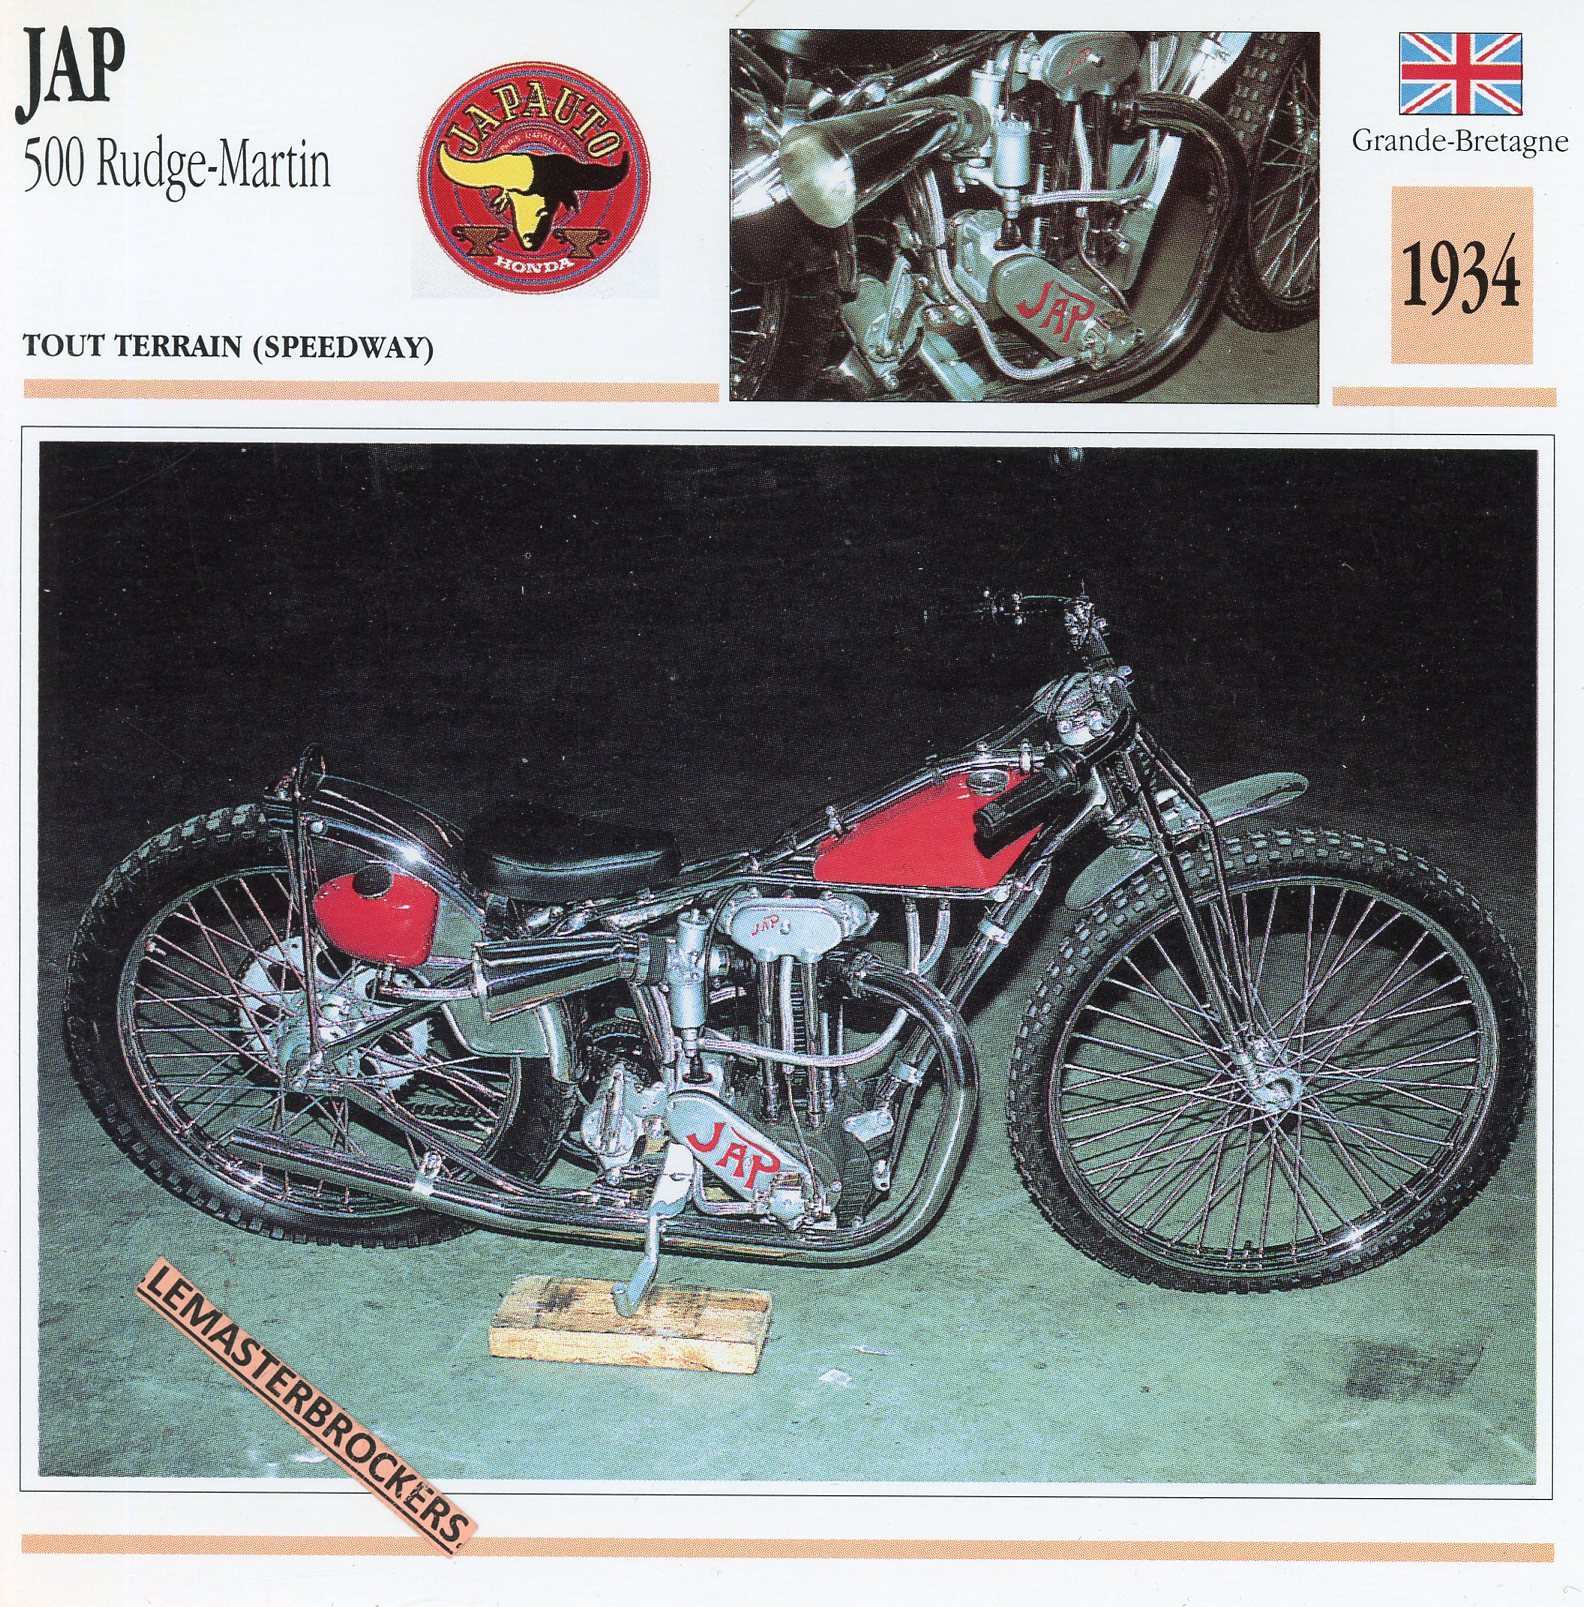 JAP 500 RUGGE MARTIN 1934 - FICHE MOTO - MOTORCYCLE CARDS ATLAS